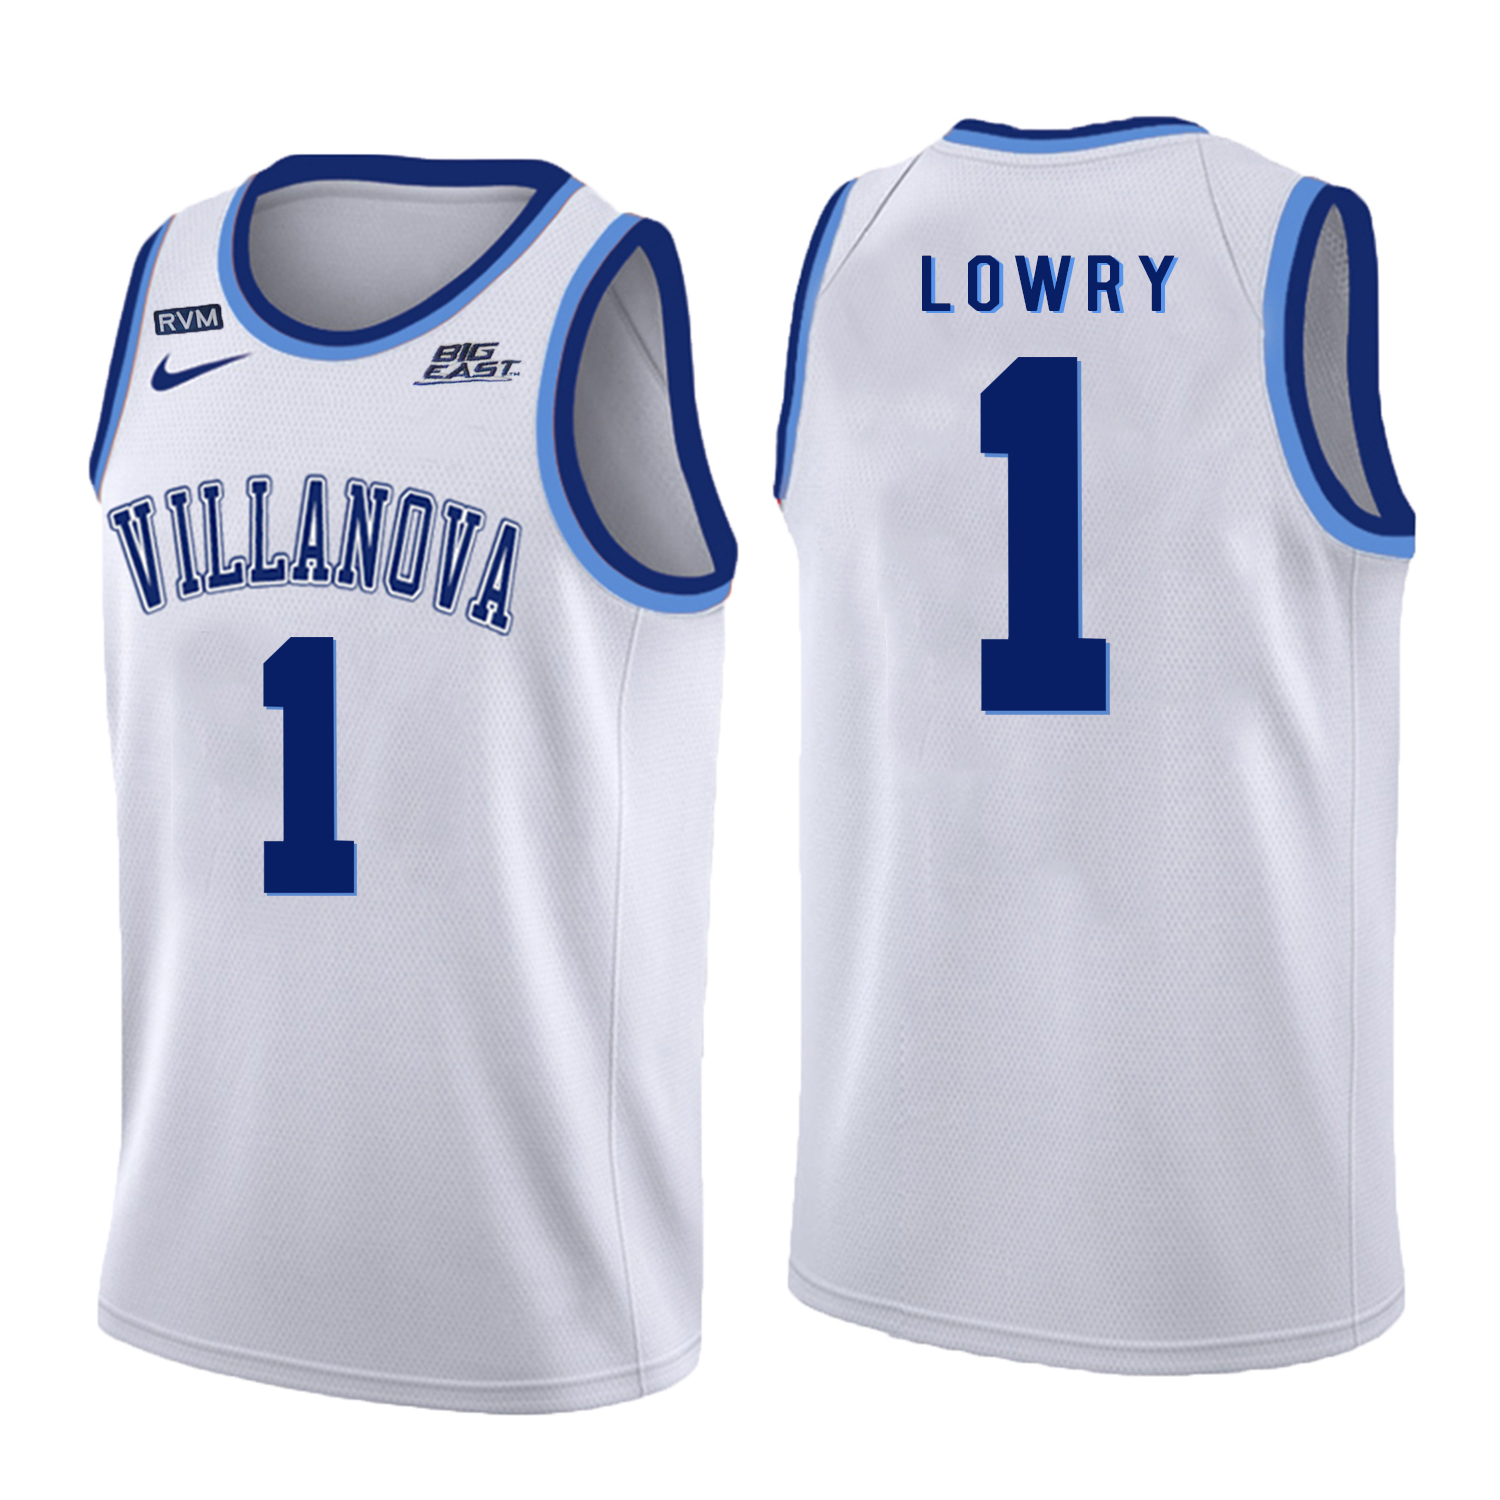 Villanova Wildcats 1 Kyle Lowry White College Basketball Jersey